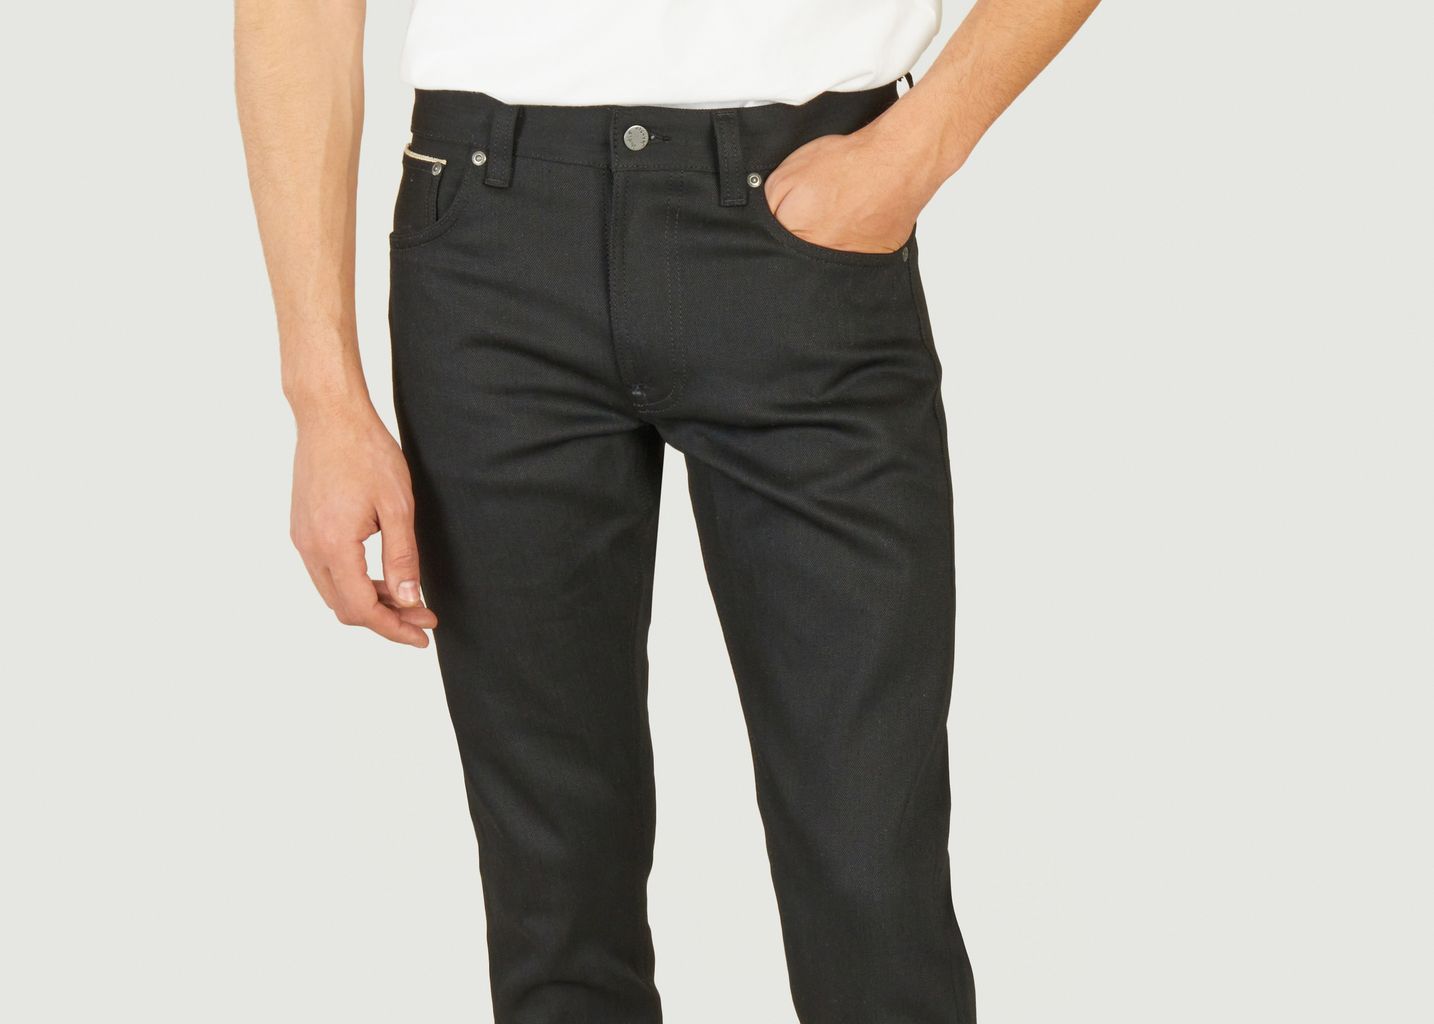 12.75 oz. black organic cotton Lean Dean jeans - Nudie Jeans